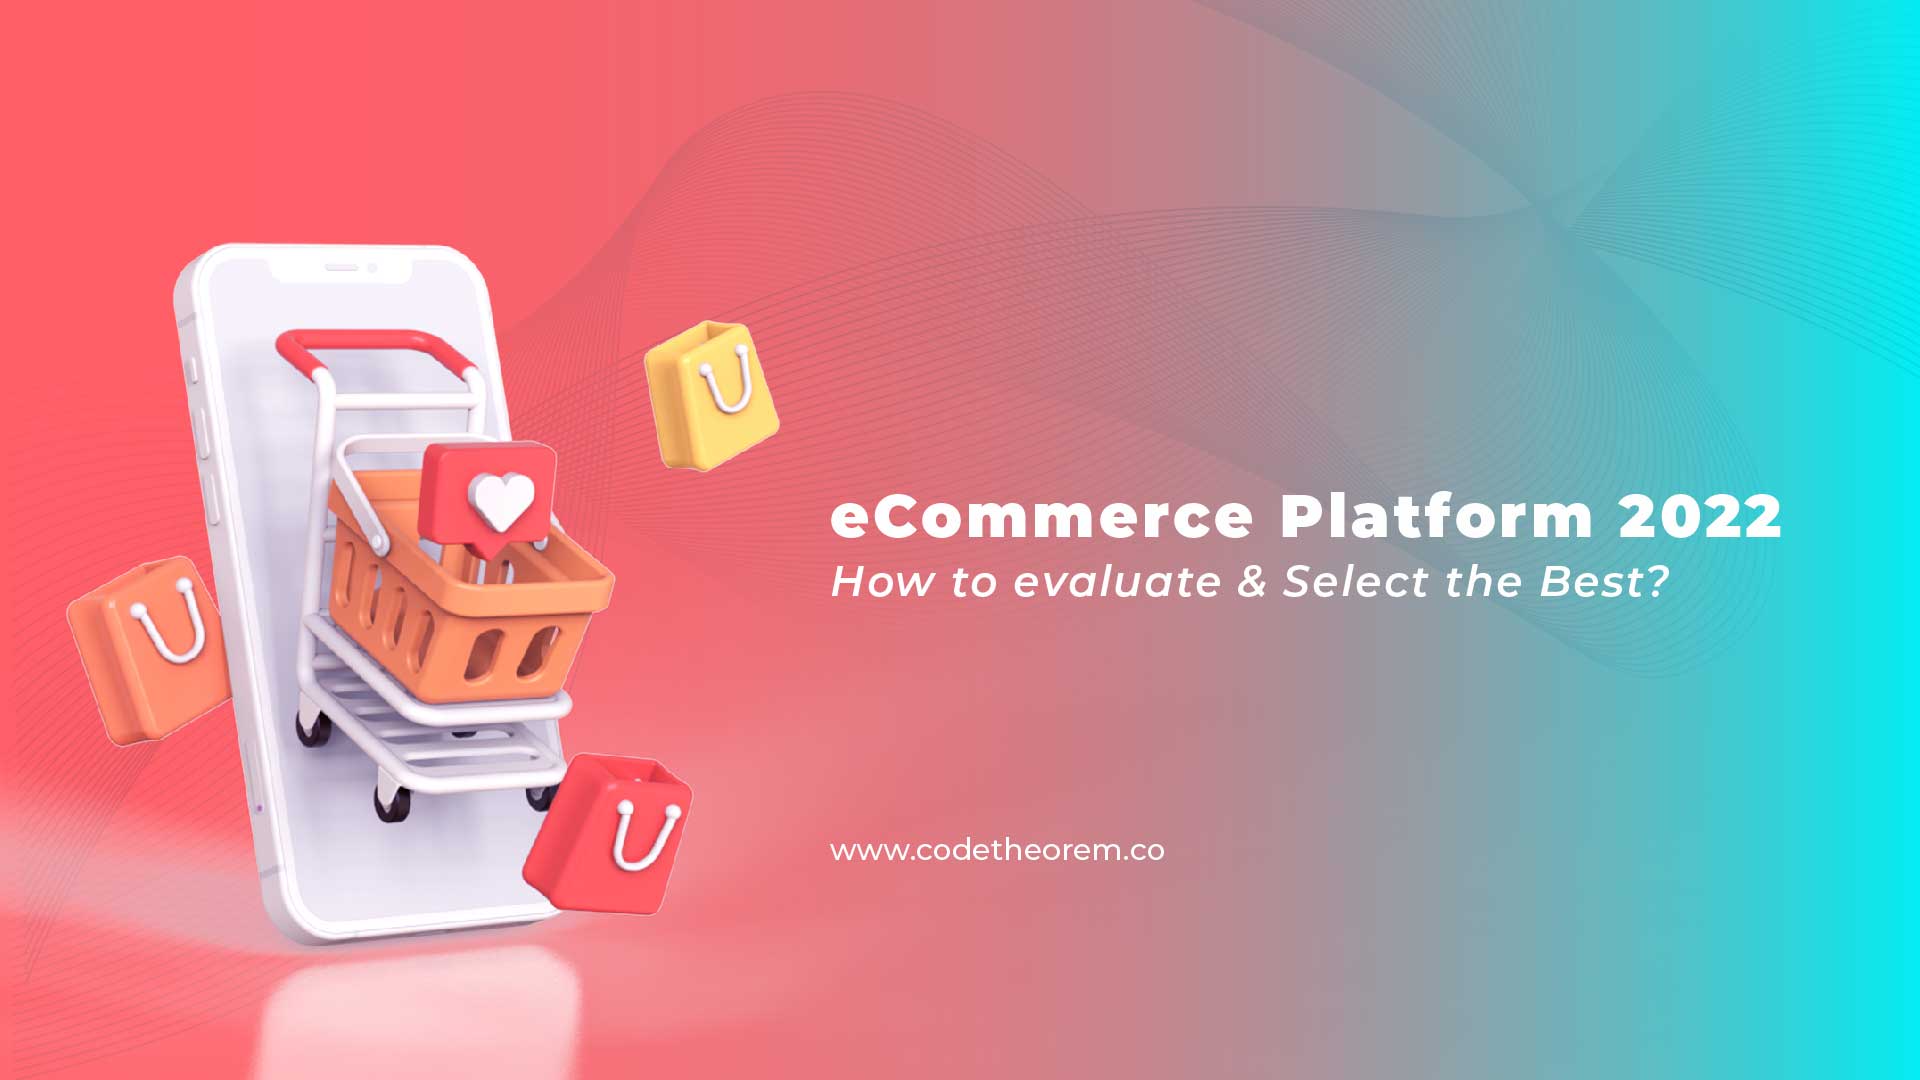 Ecommerce Platform